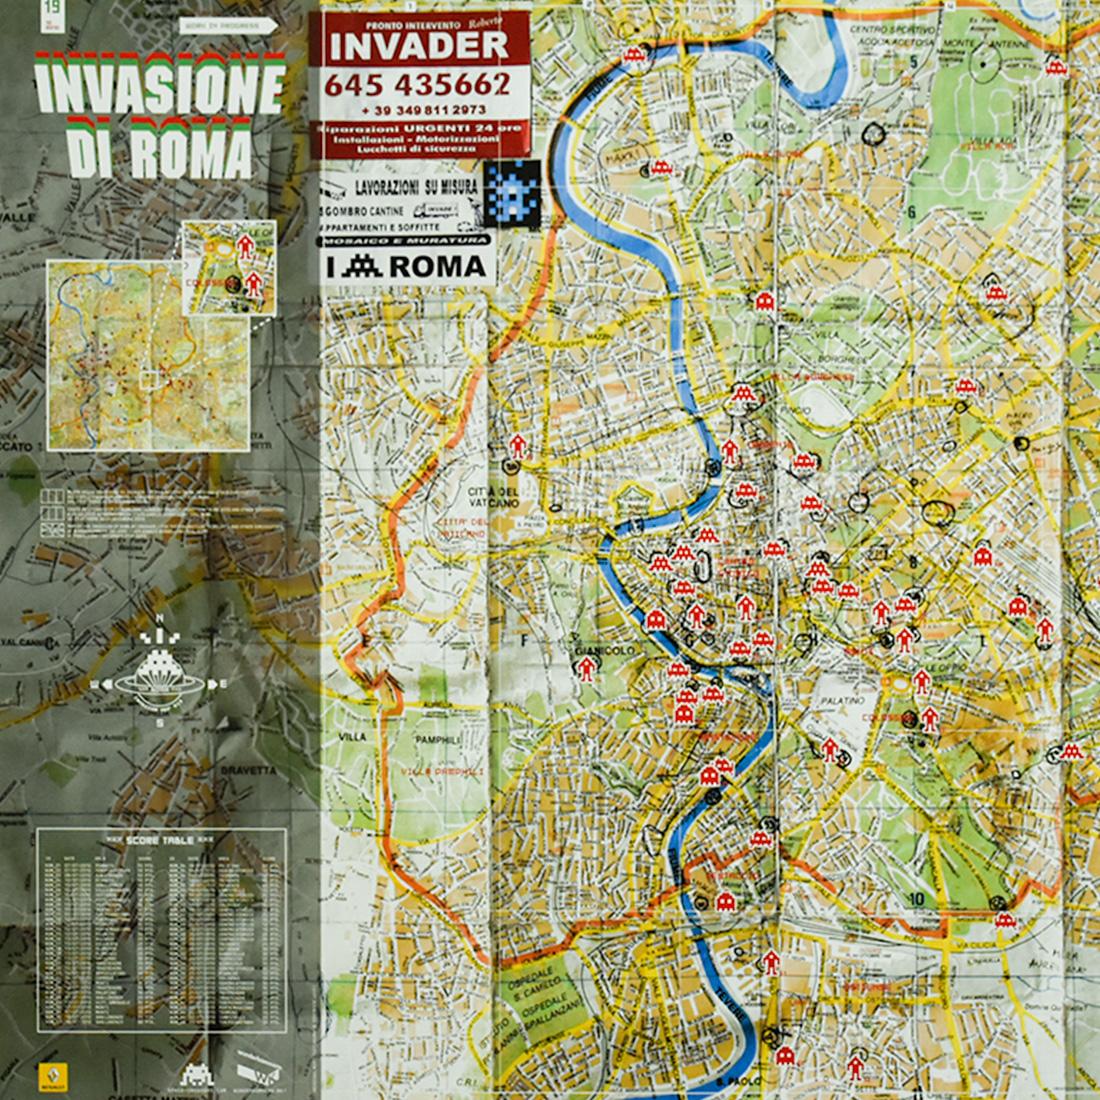 INVADER Invasione di Roma (Rome Map), version imprimée signée - Contemporain Print par Invader